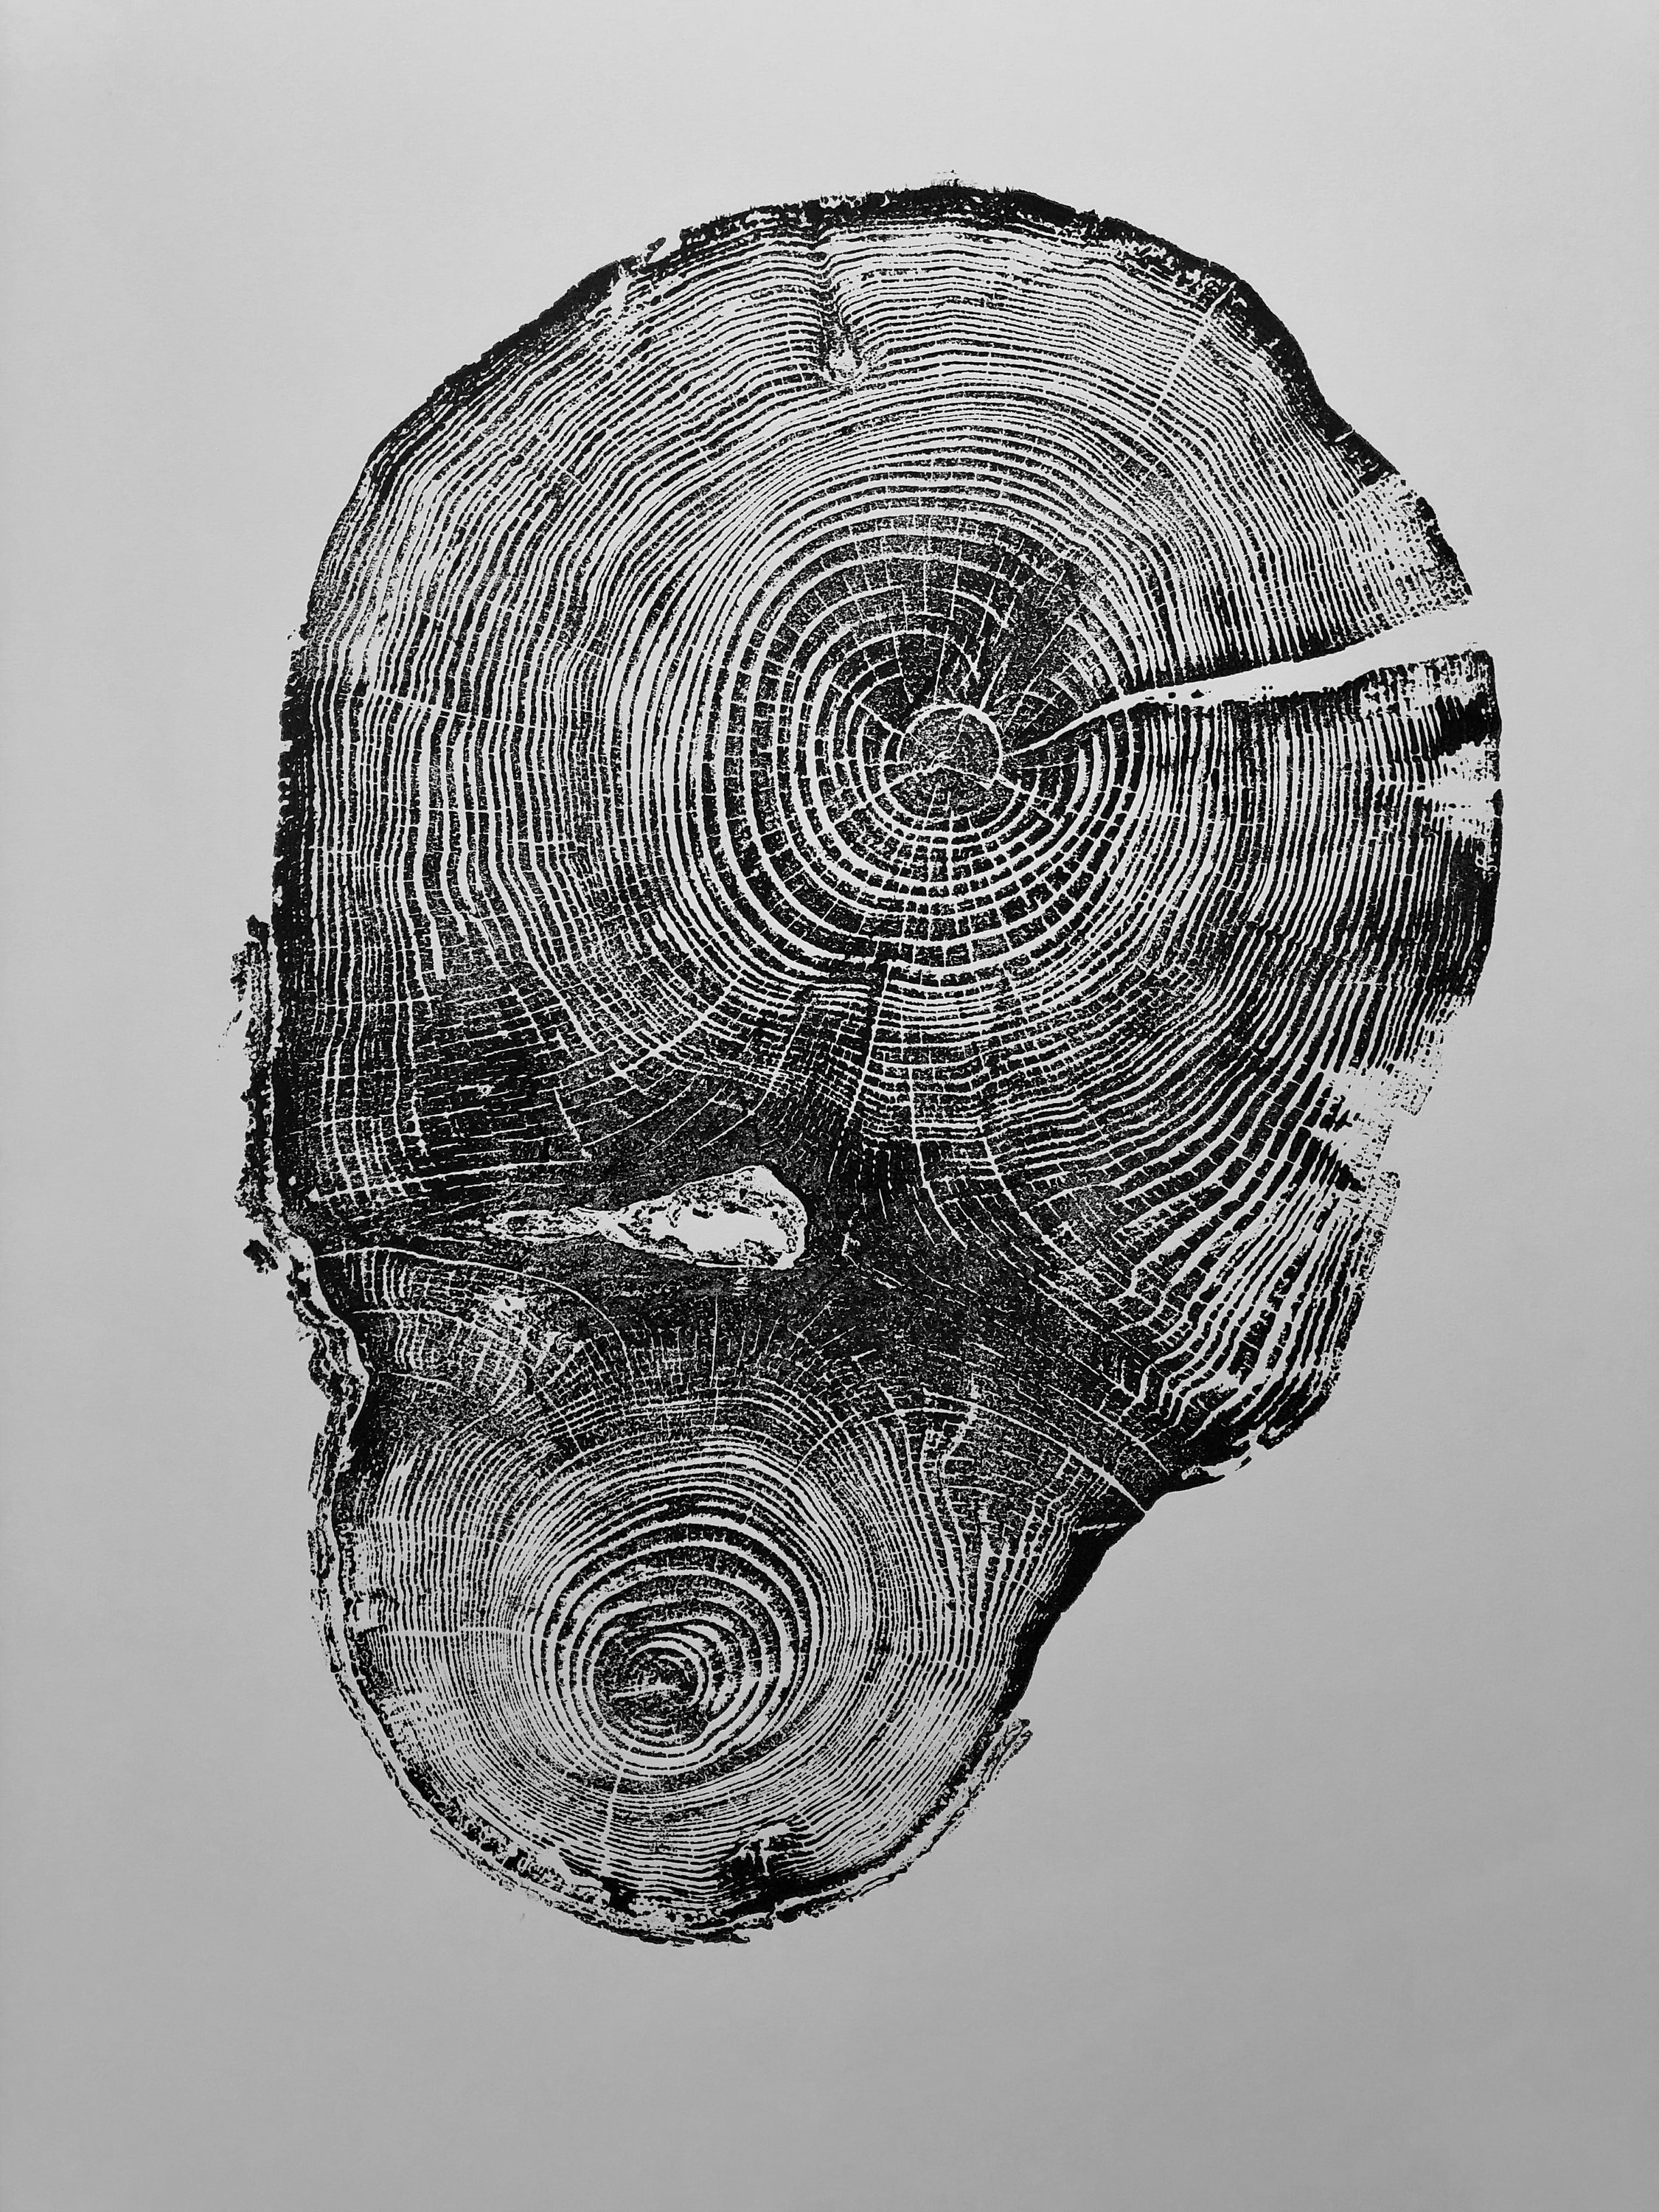 Tree Stump Art Prints, Set of Four Large 24x36 inch Tree Ring Prints ...